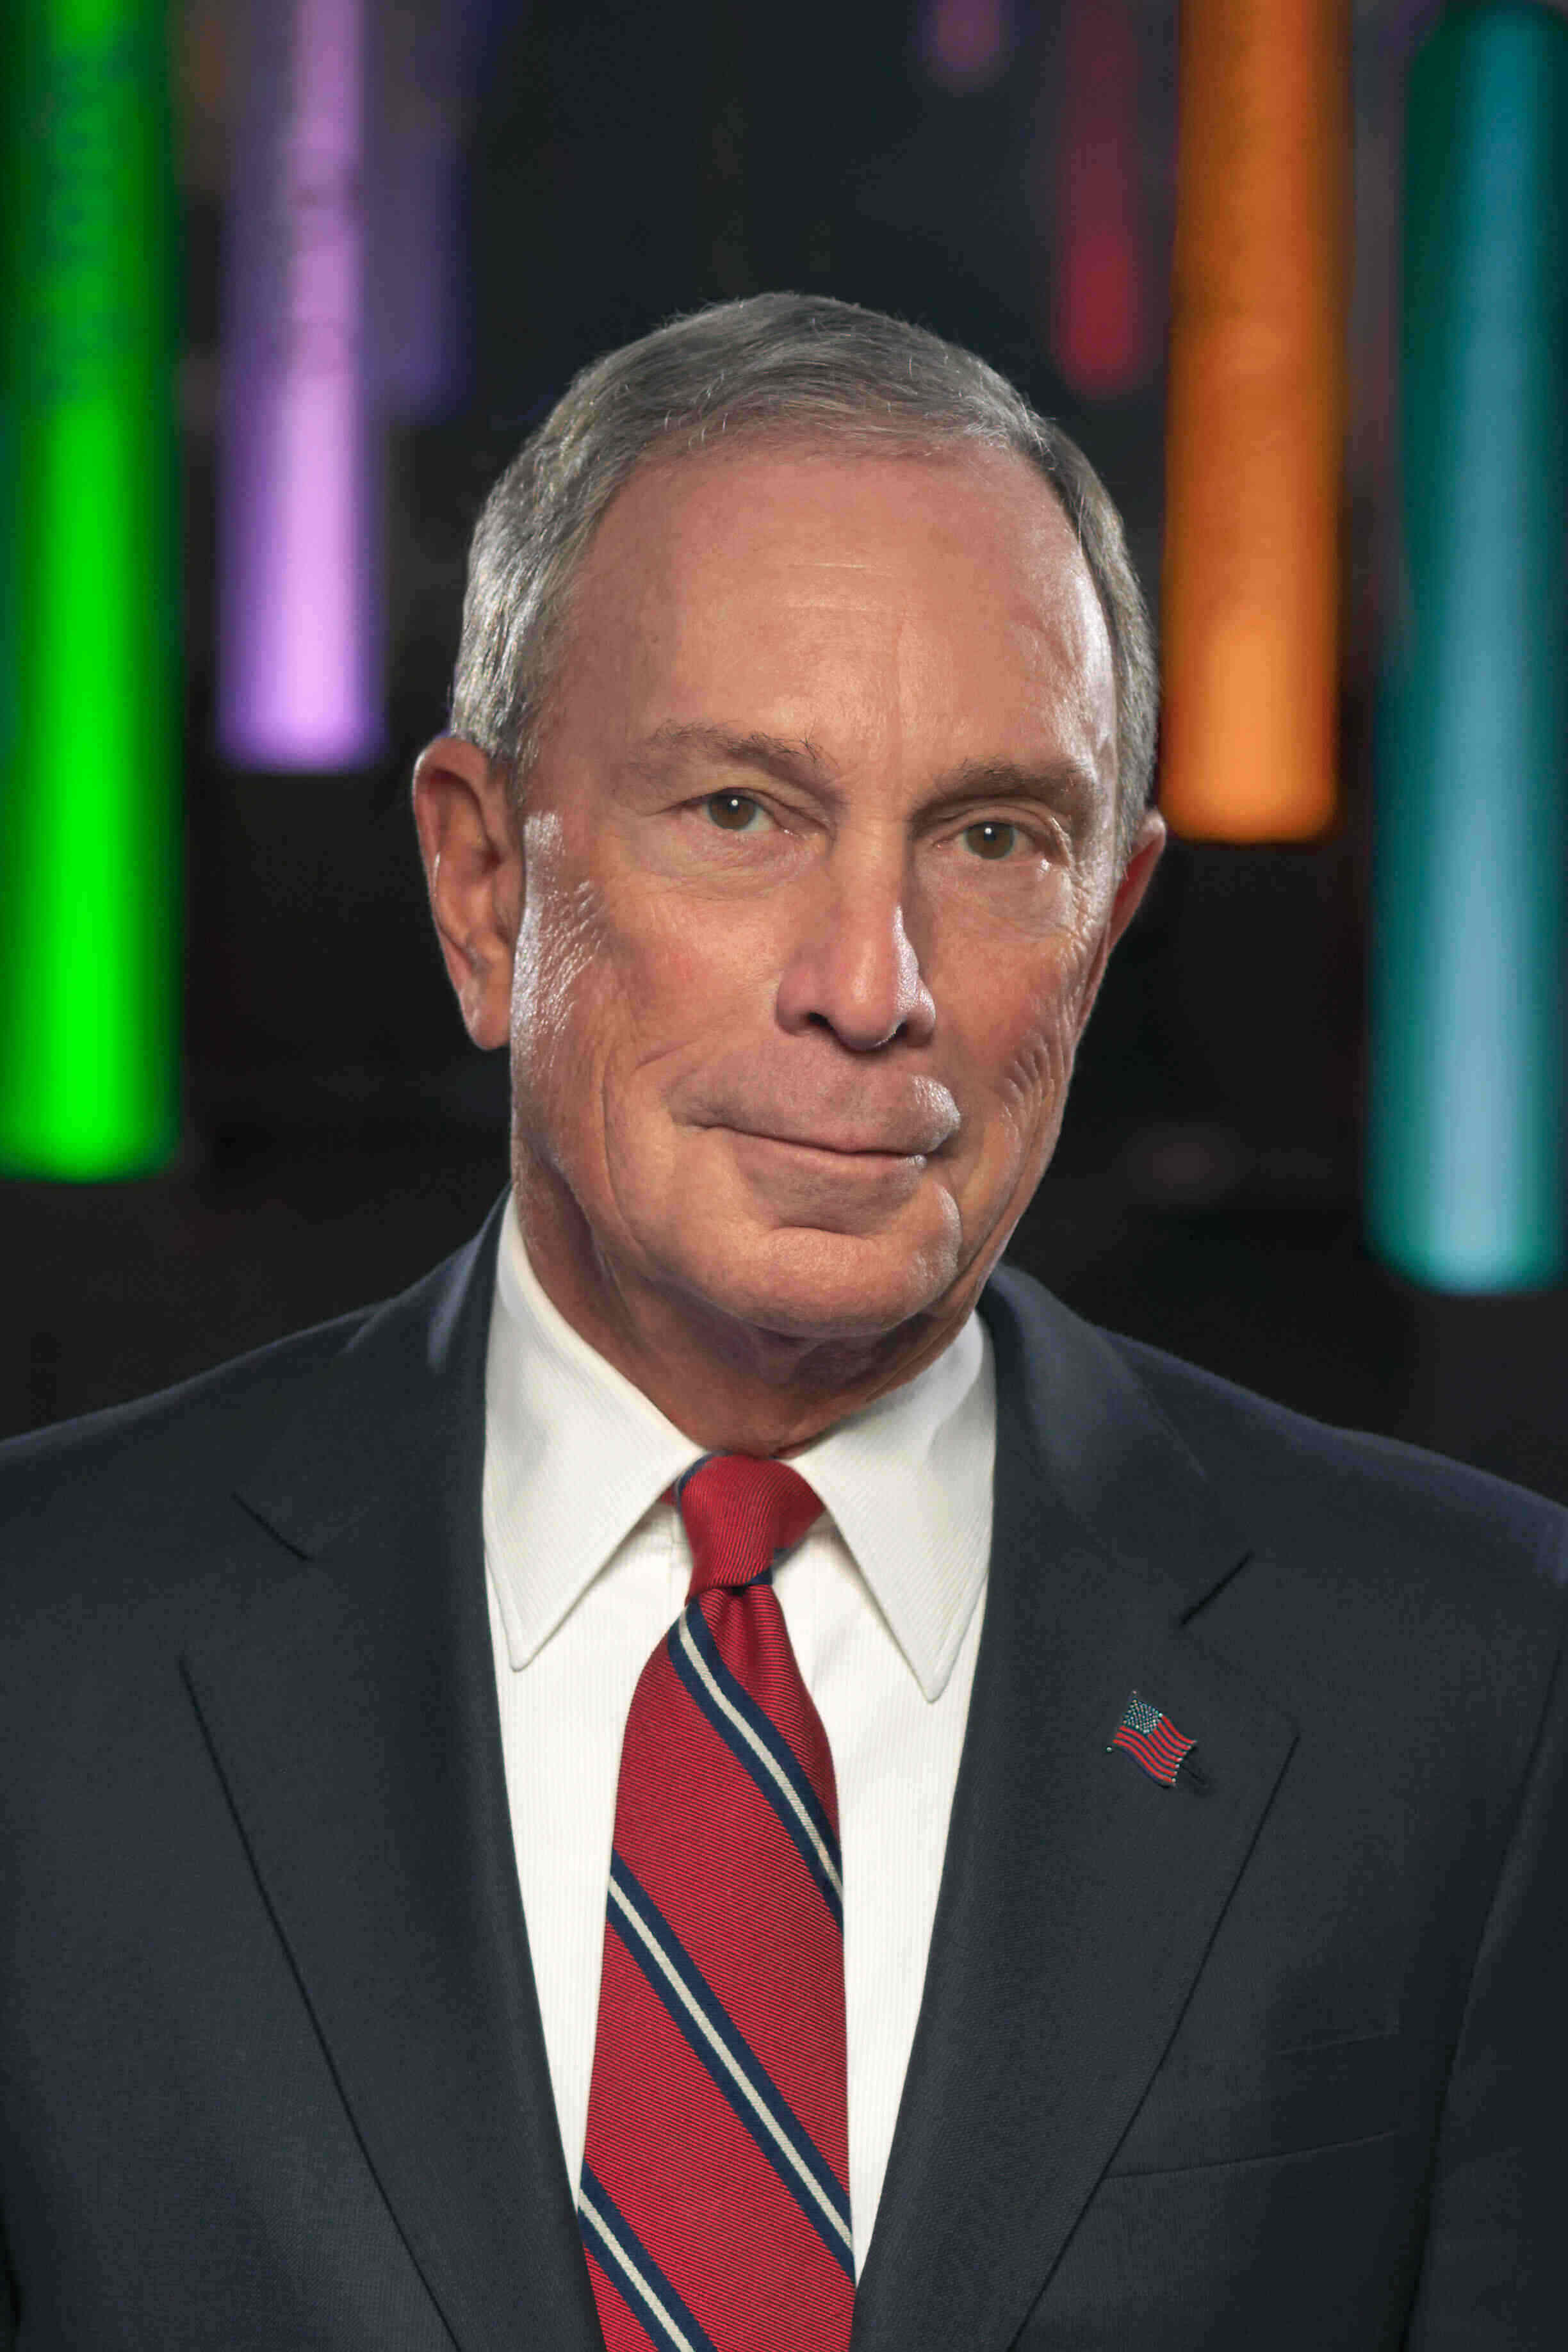 Michael Bloomberg,